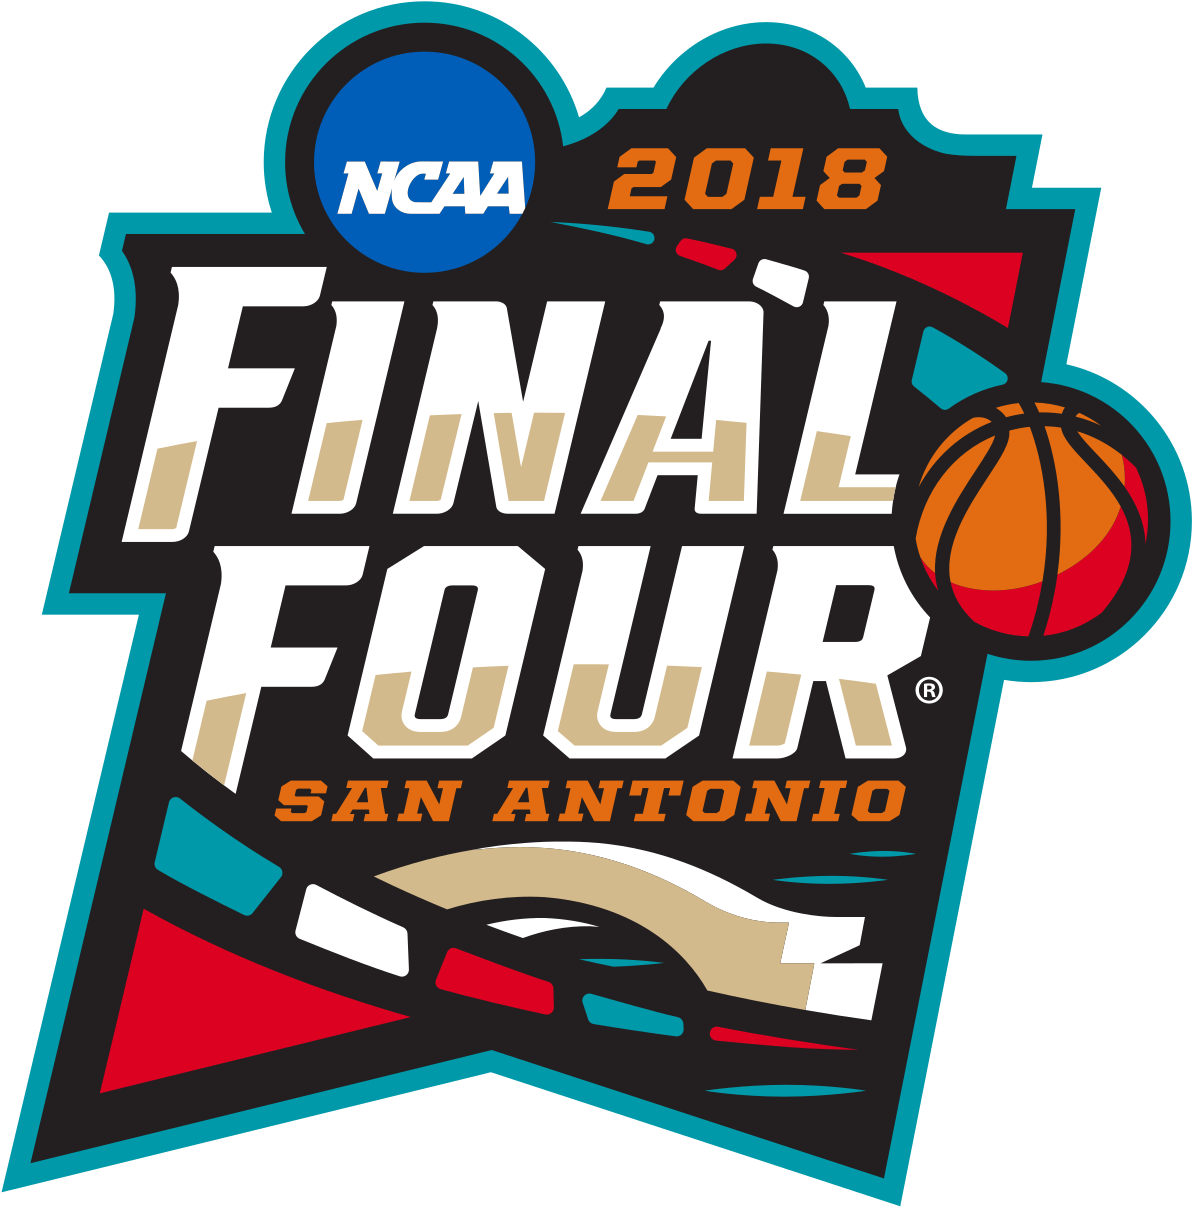 2018 Ncaa Division I Men S Basketball Tournament Wikipedia - March Madness 2018 San Antonio (1200x1215)